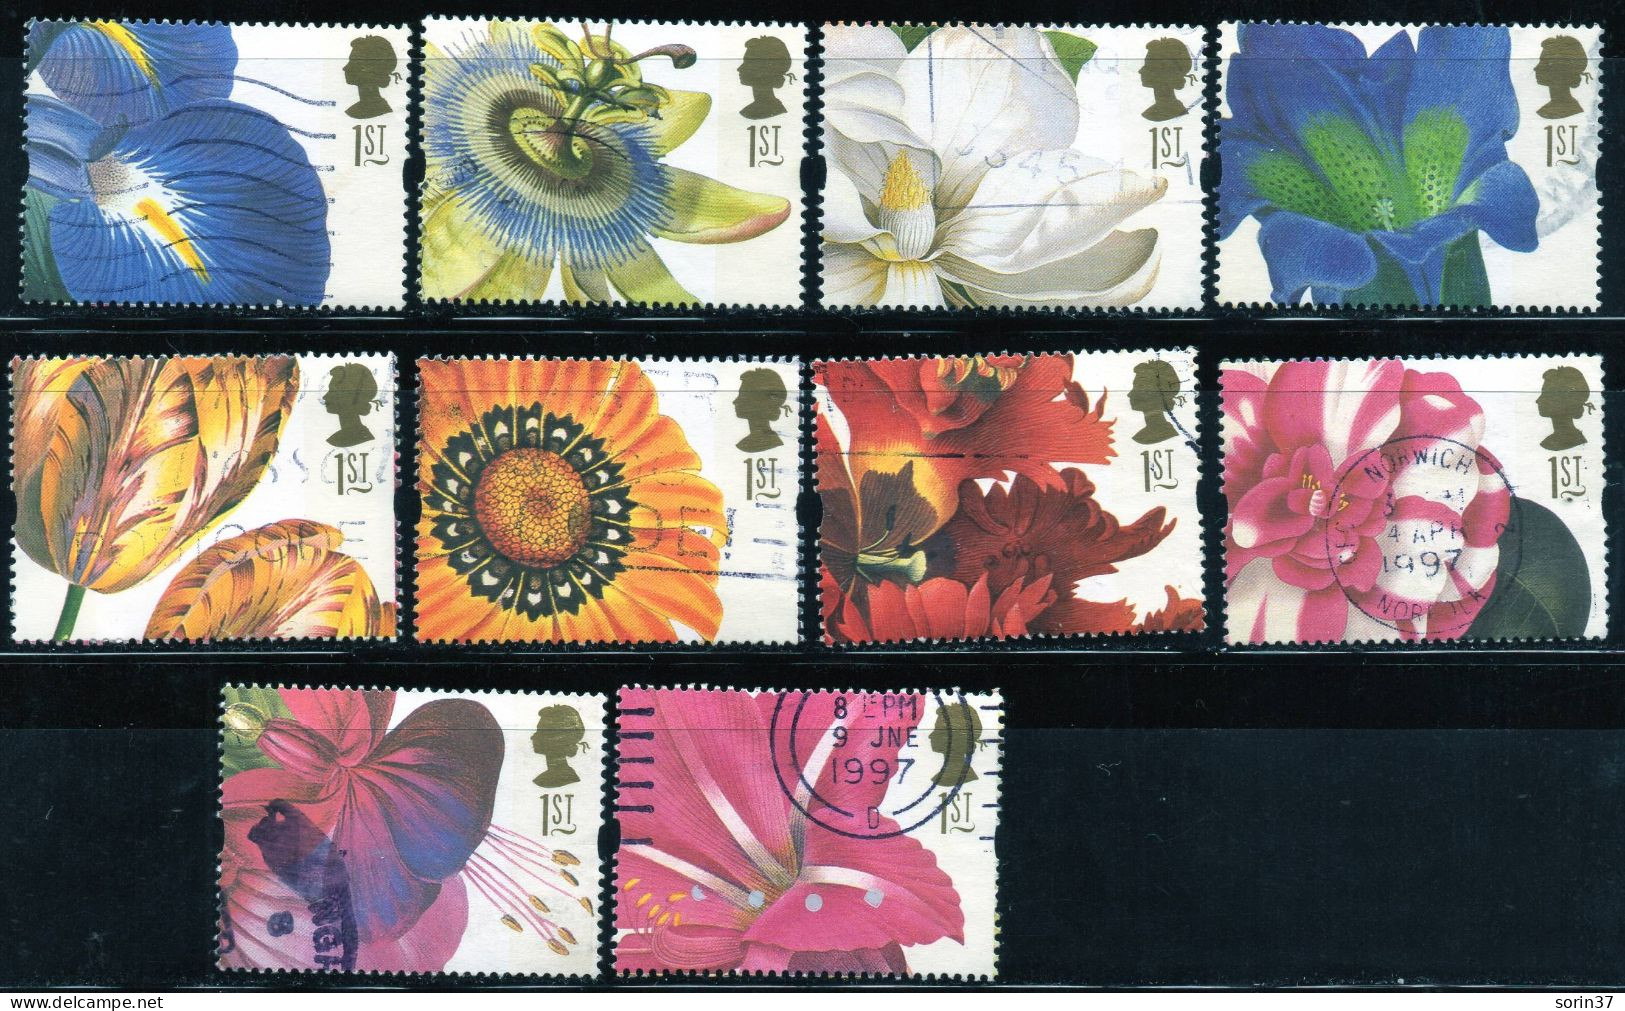 Gran Bretaña / Inglaterra Serie Completa Año 1997 Usada Flores - Used Stamps